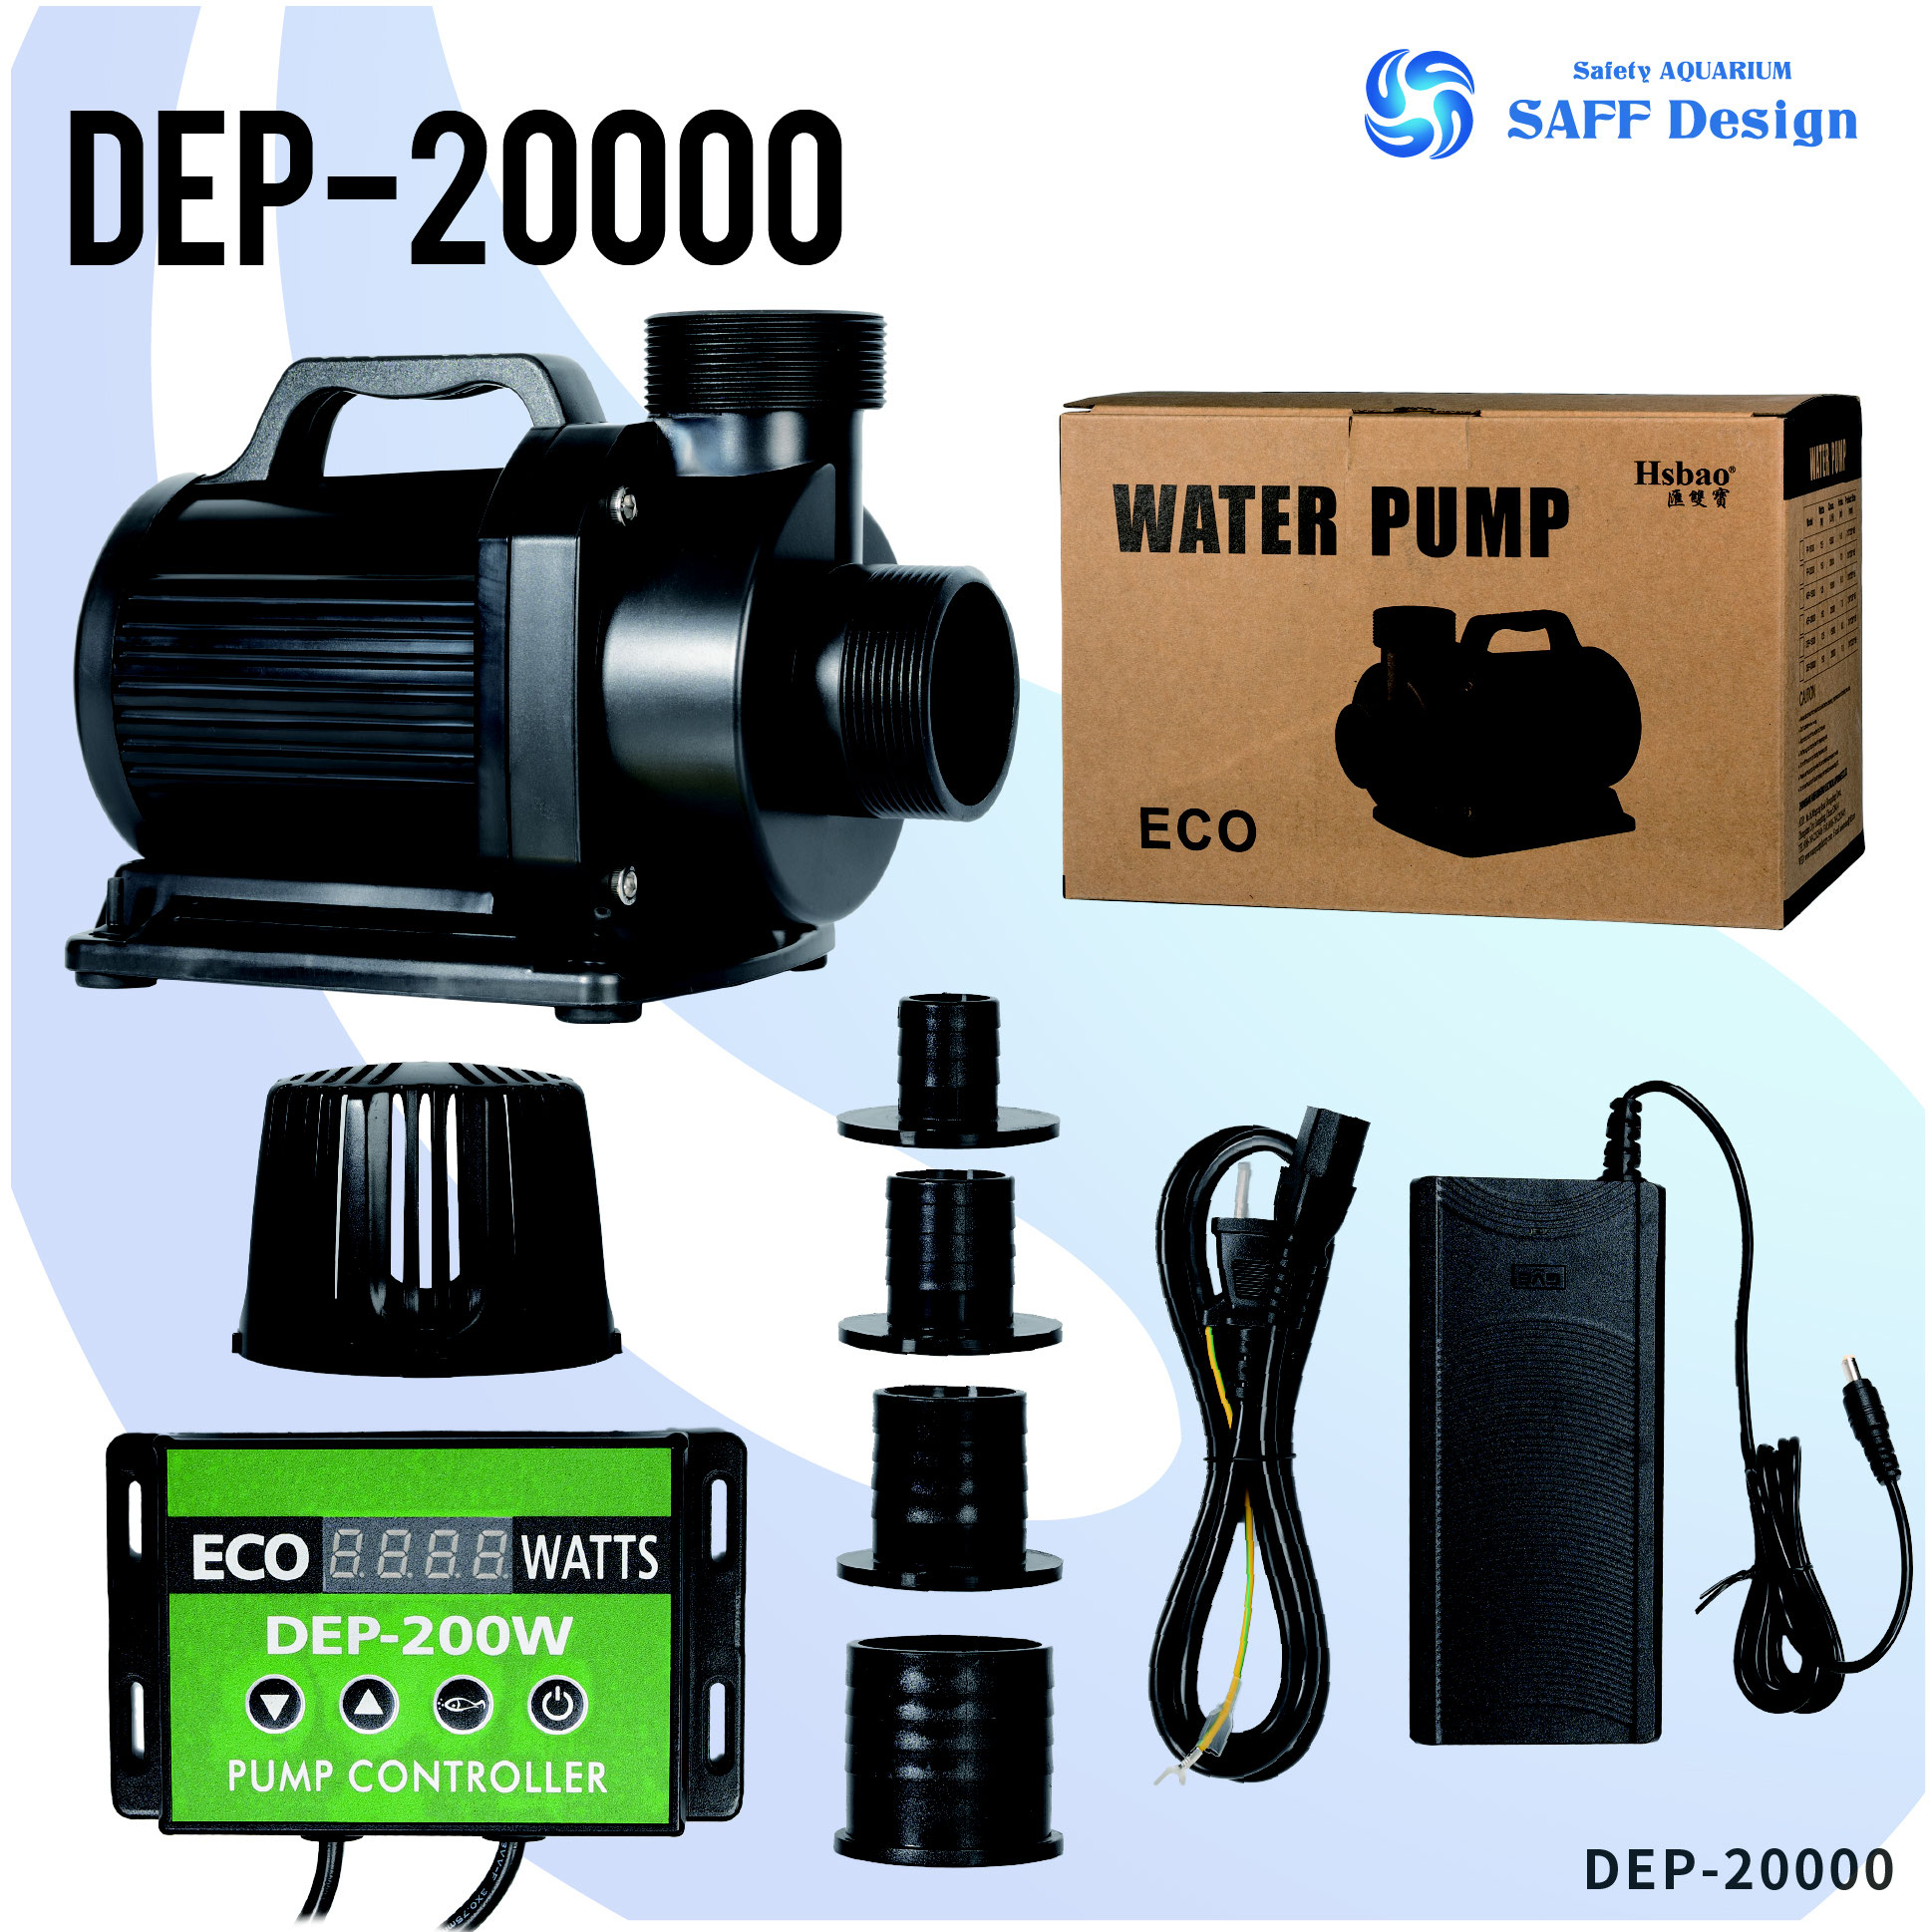 DEP-20000 - saff design サフデザイン hsbao 背面濾過 水槽フランジ